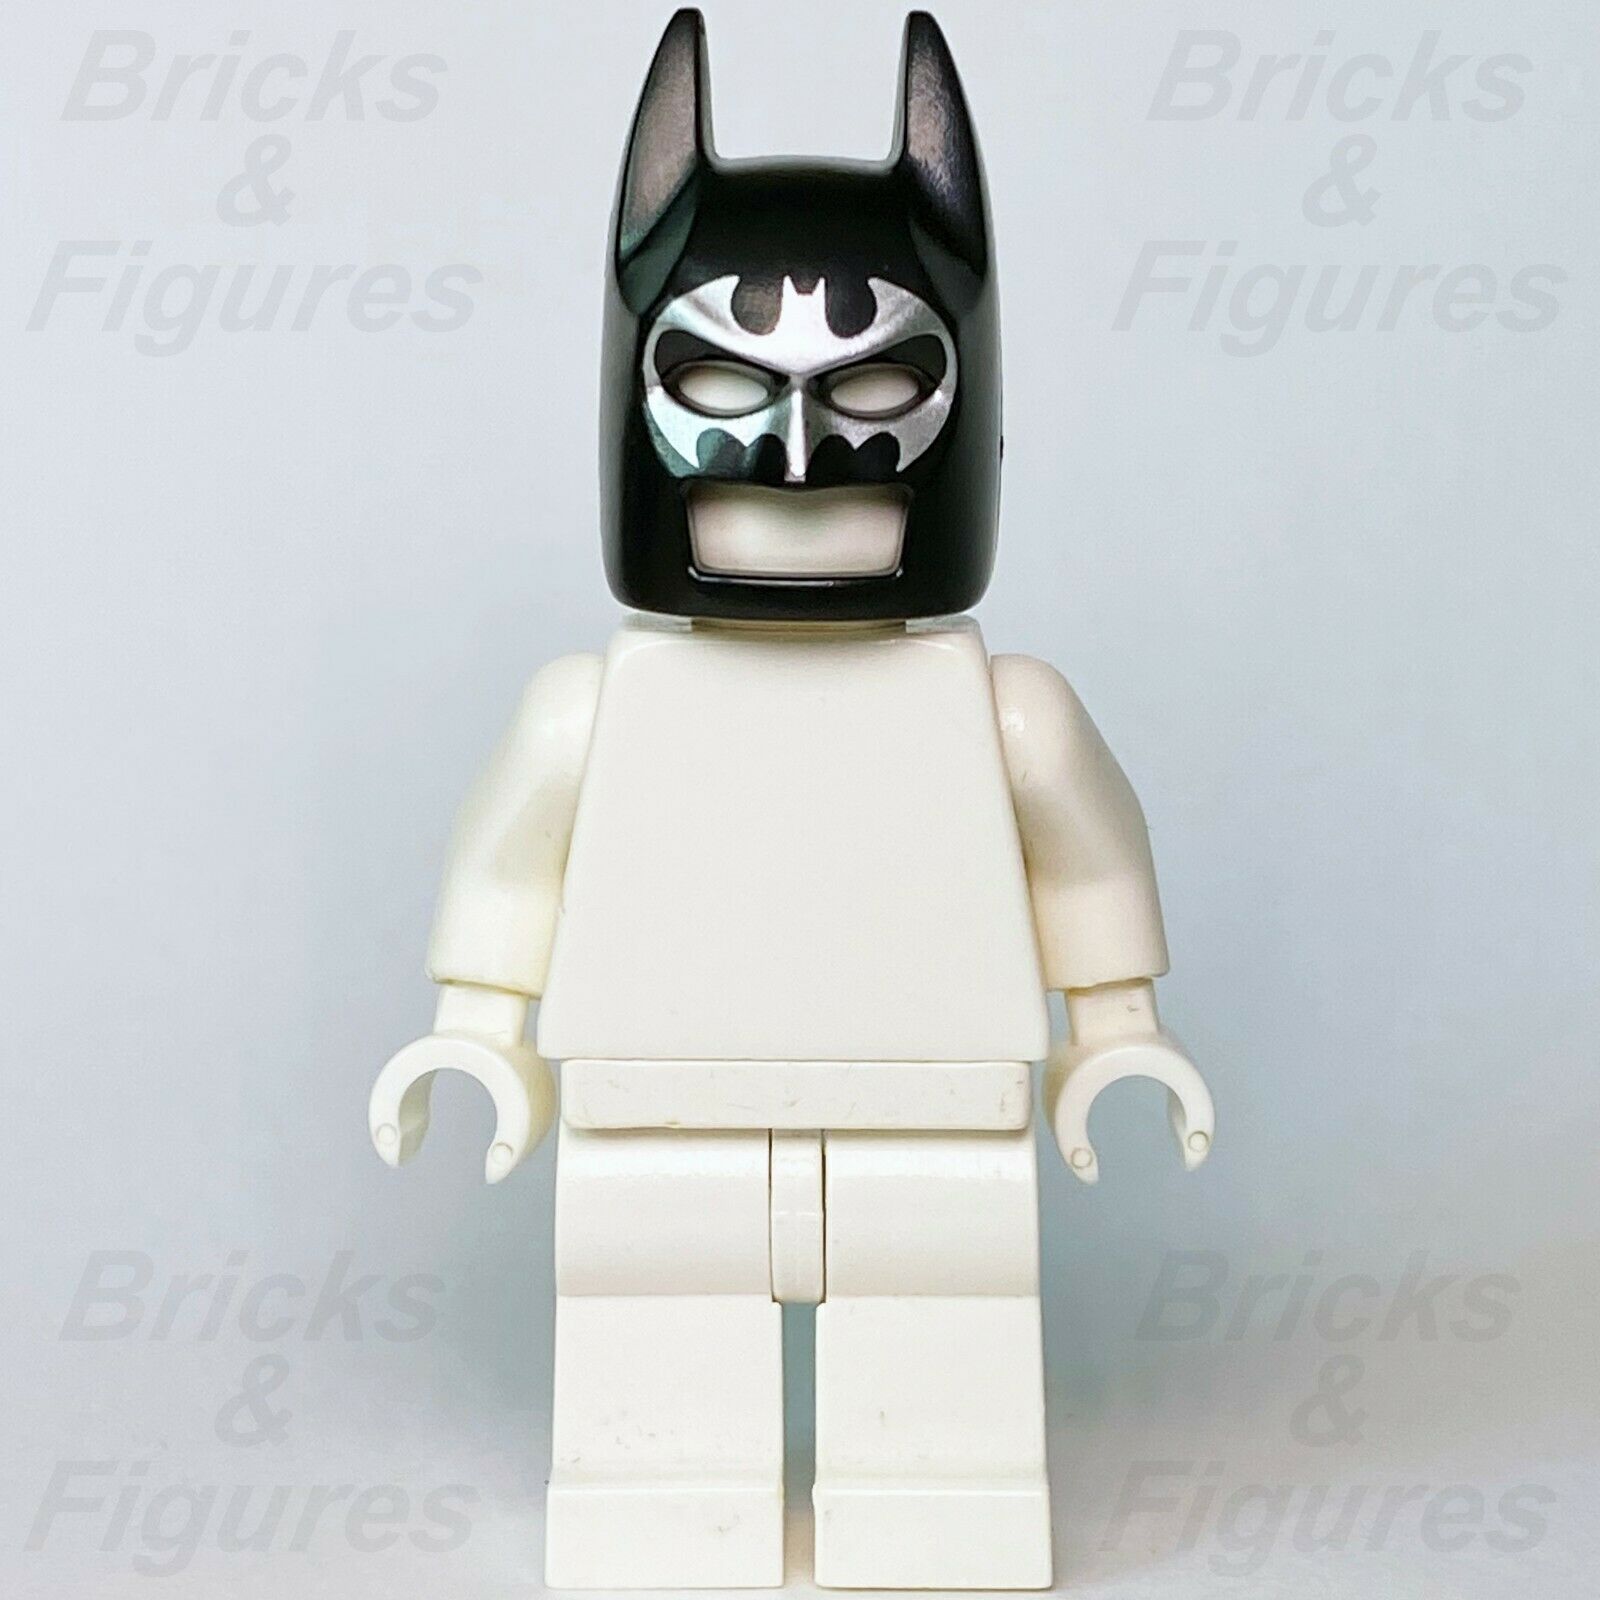 DC Super Heroes LEGO Glam Metal Batman Helmet Mask The Movie Part 71017 - Bricks & Figures